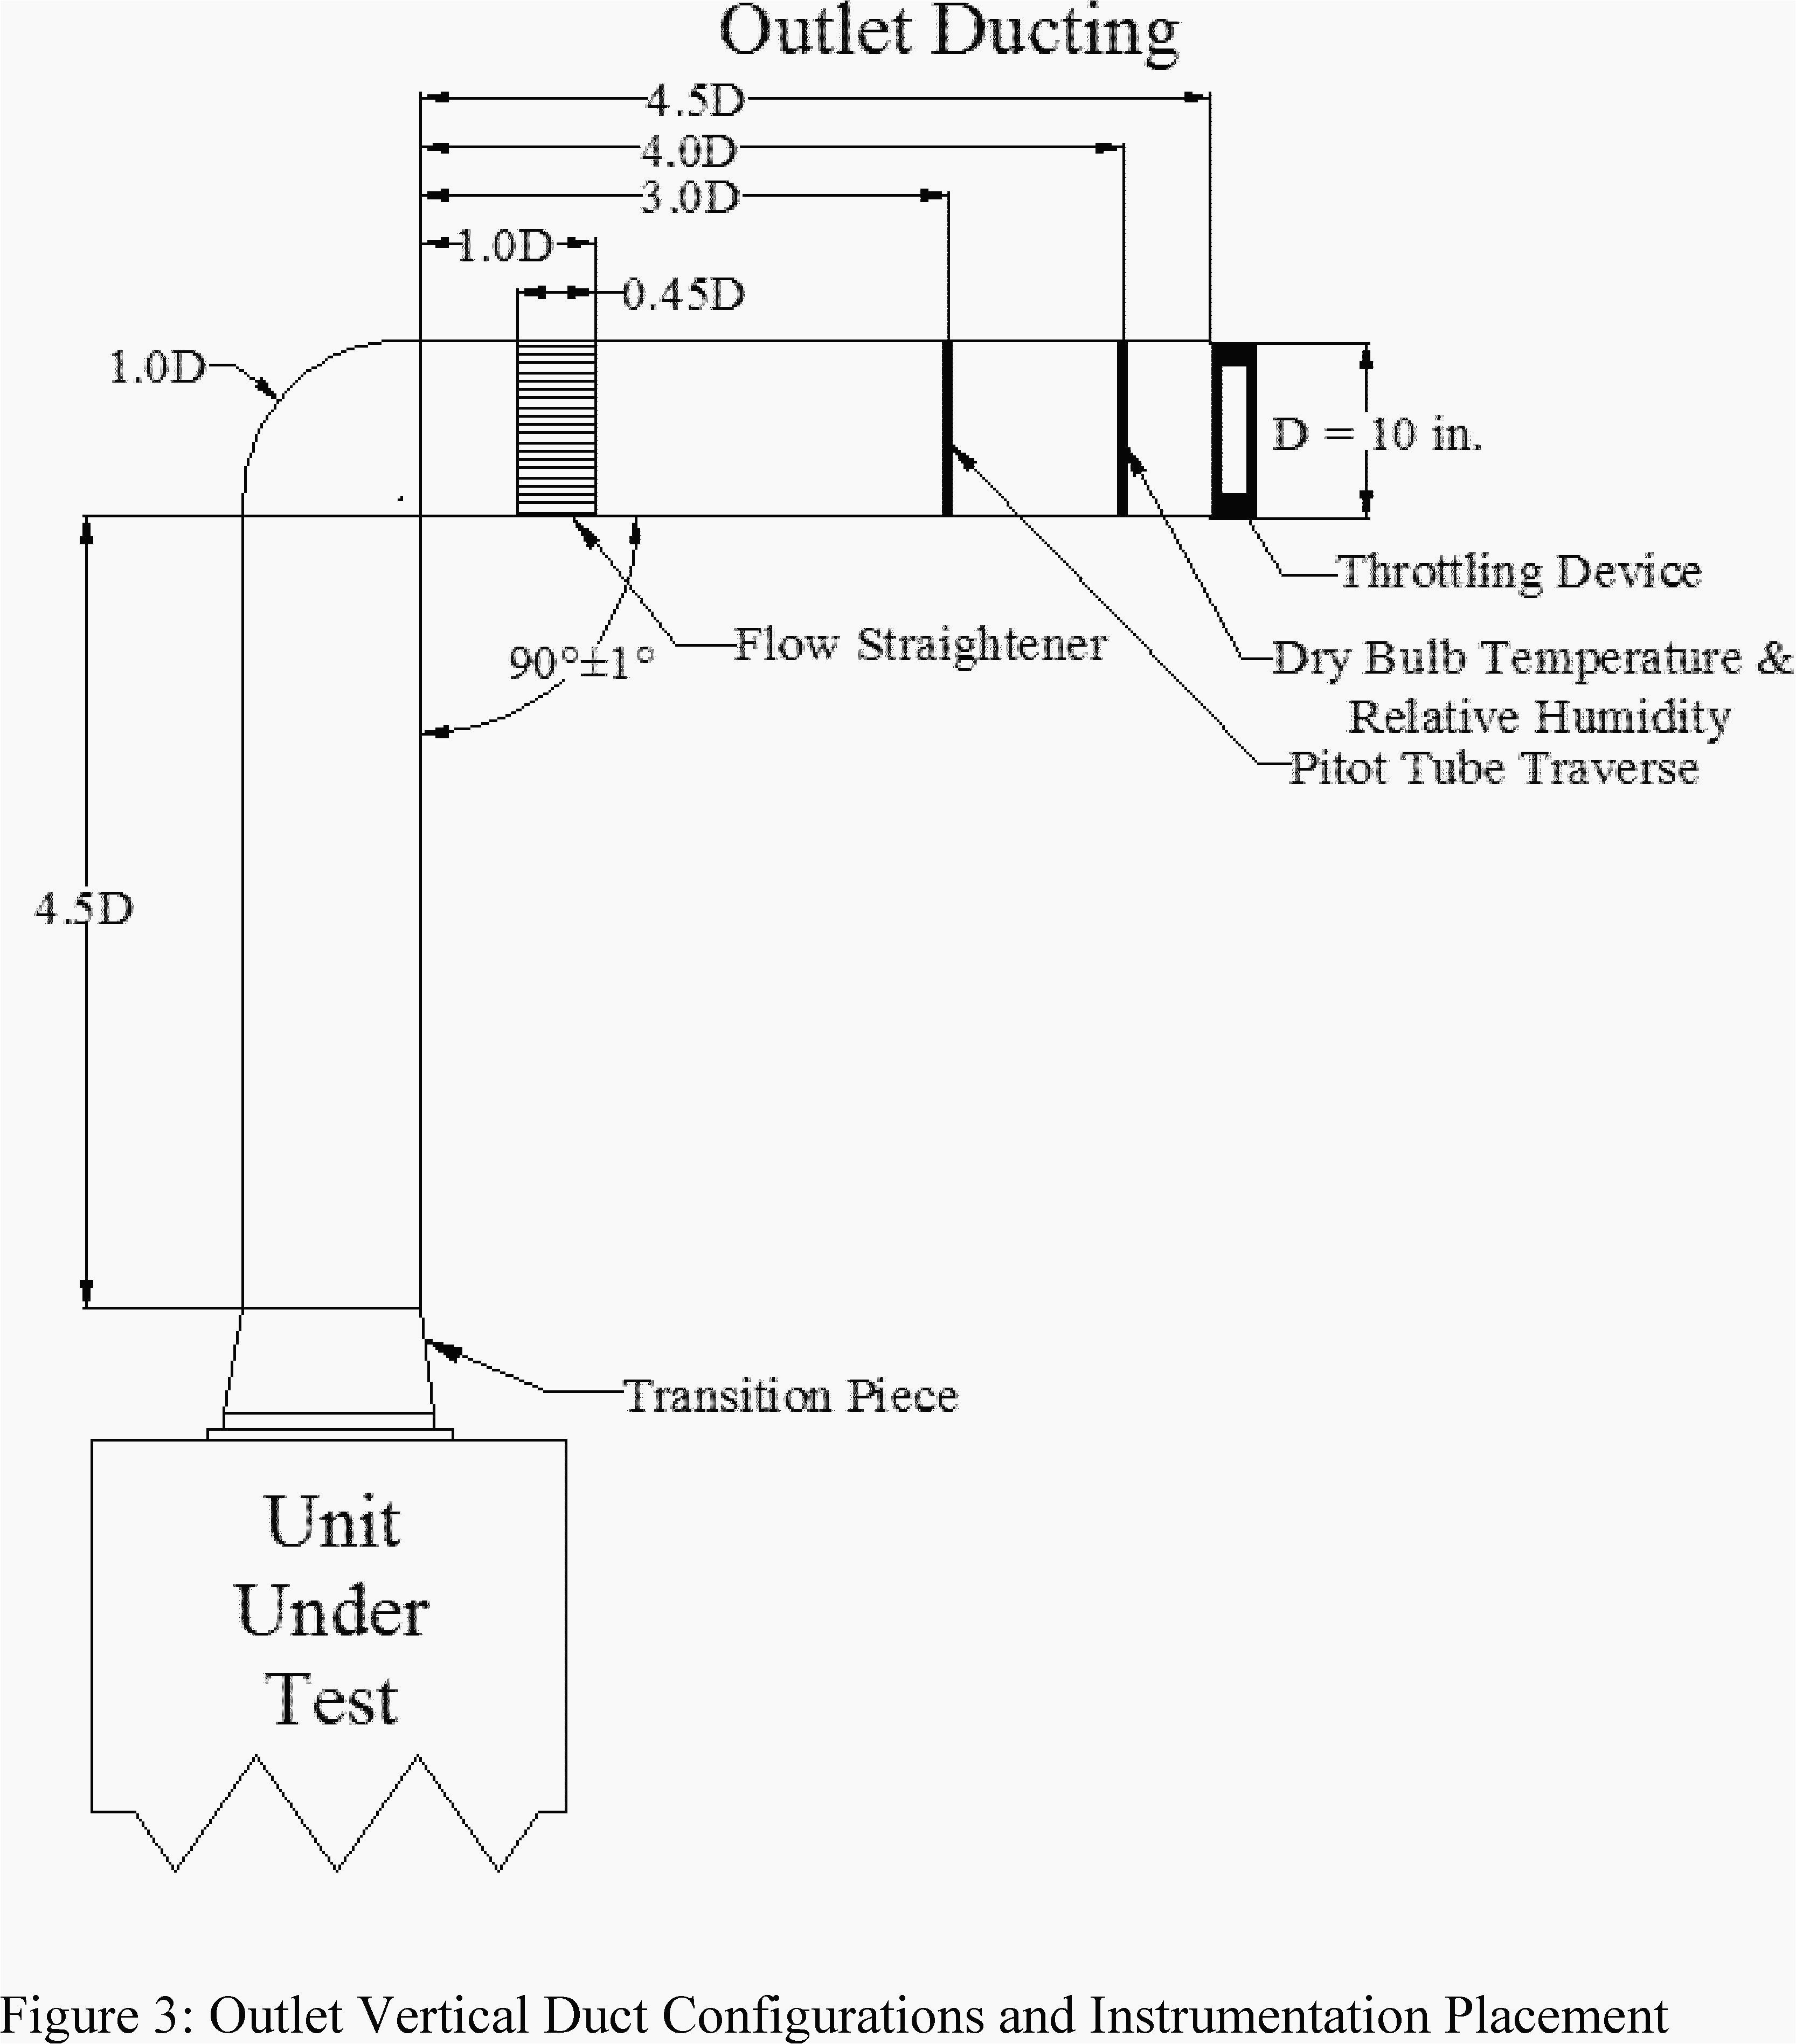 dewalt wiring diagram use wiring diagramwiring diagram de walt dw306 wiring diagram name dewalt wiring diagrams